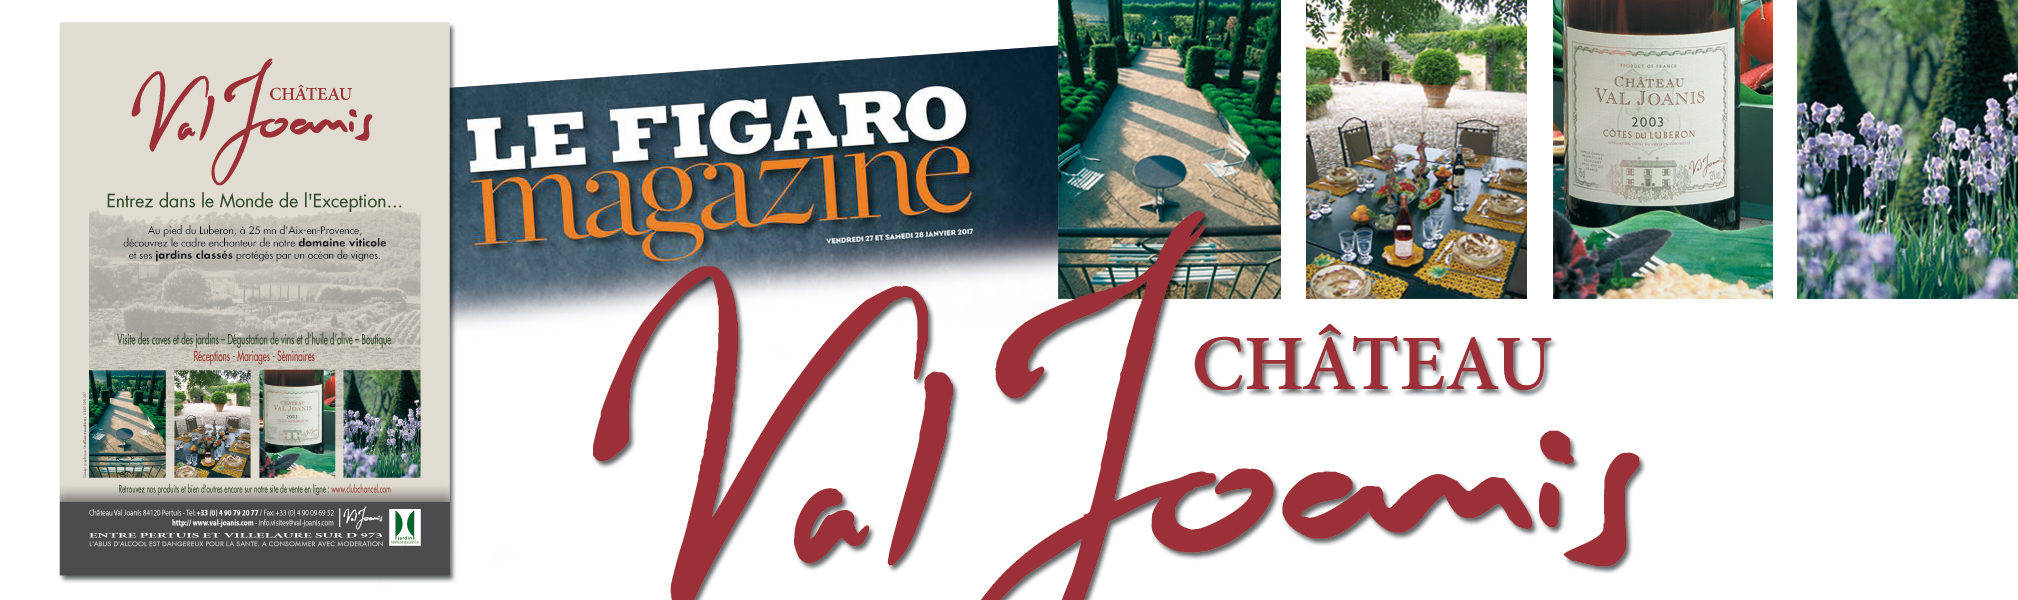 Château Val Joanis - Encart presse vin figaro magazine